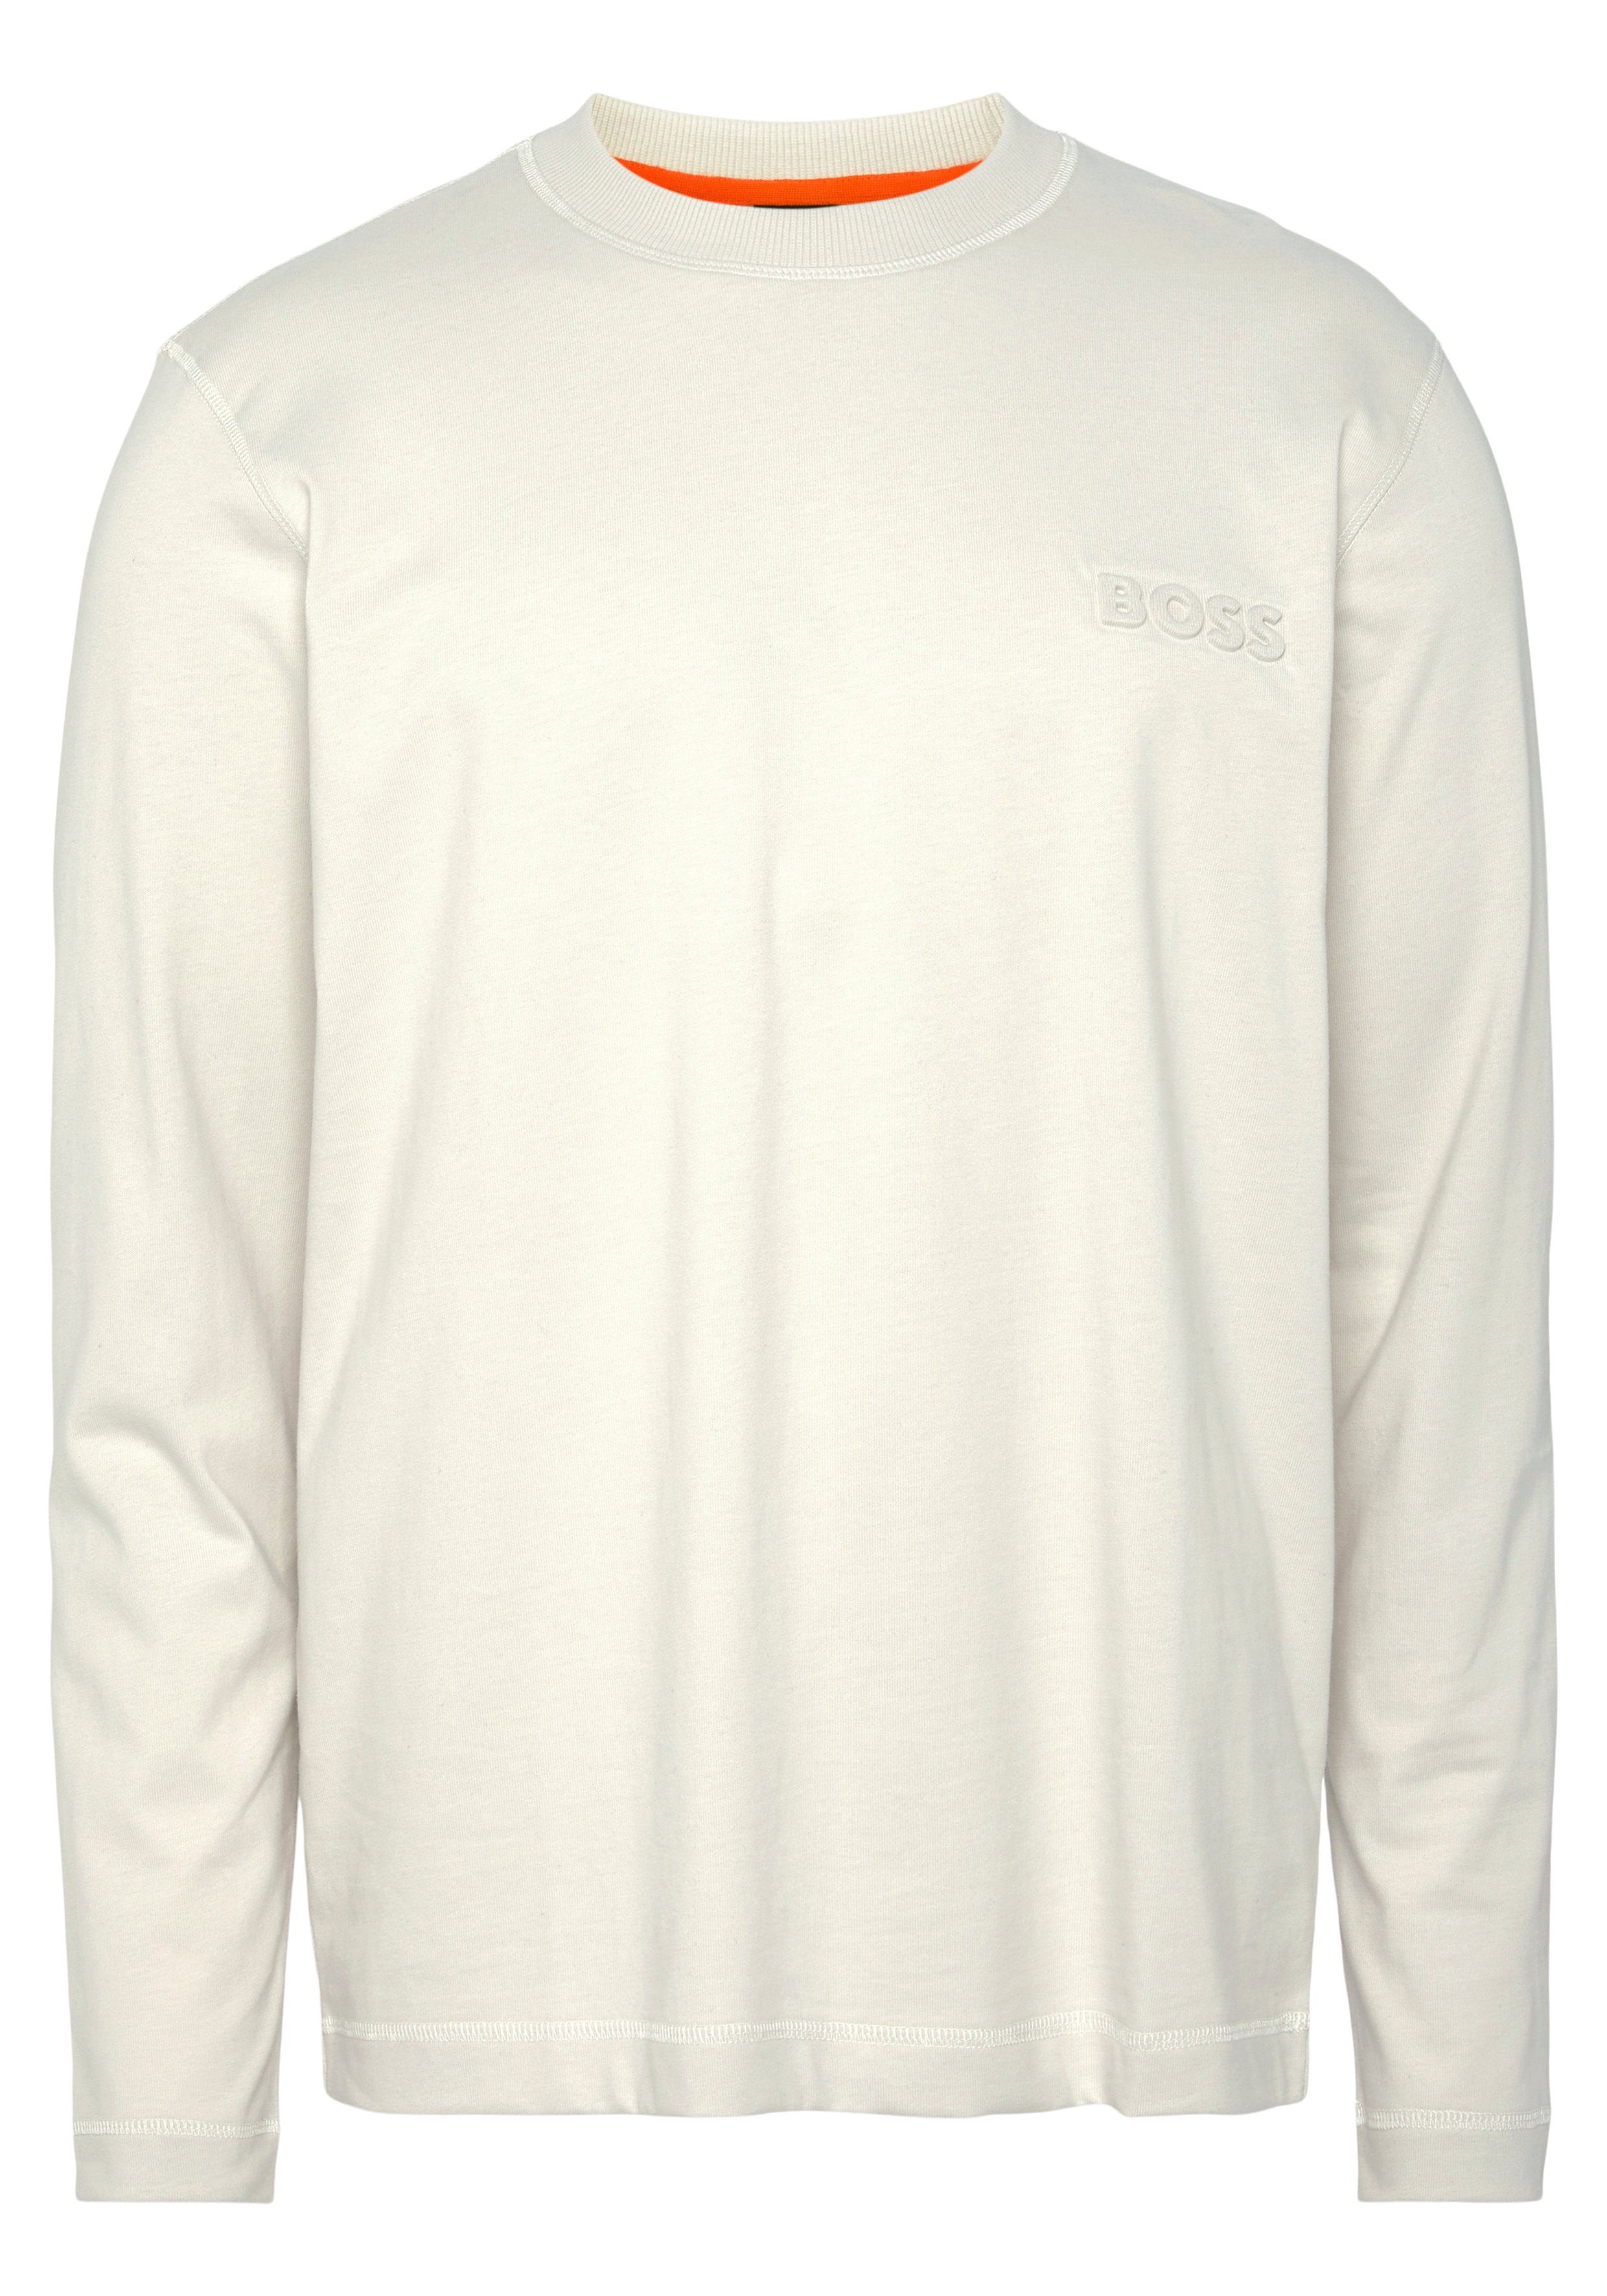 BOSS ORANGE mit Teebasiclong pastellgrau T-Shirt Rundhalsausschnitt